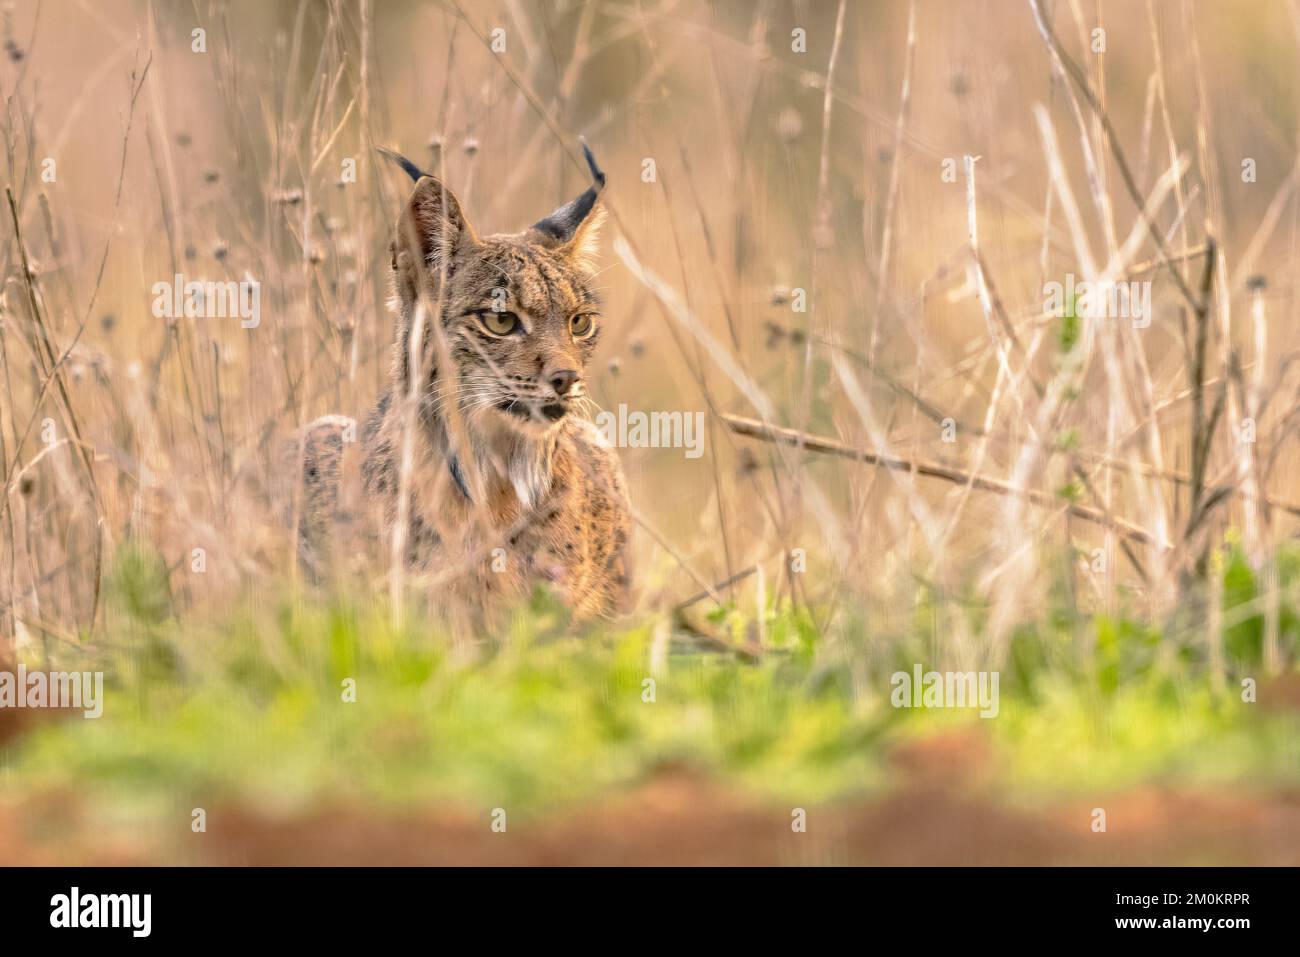 Iberian Lynx (Lynx pardinus) is a Wild Cat Species Endemic to the Iberian Peninsula in southwestern Europe. Wild Animal in Ambush Camouflage in Anduja Stock Photo